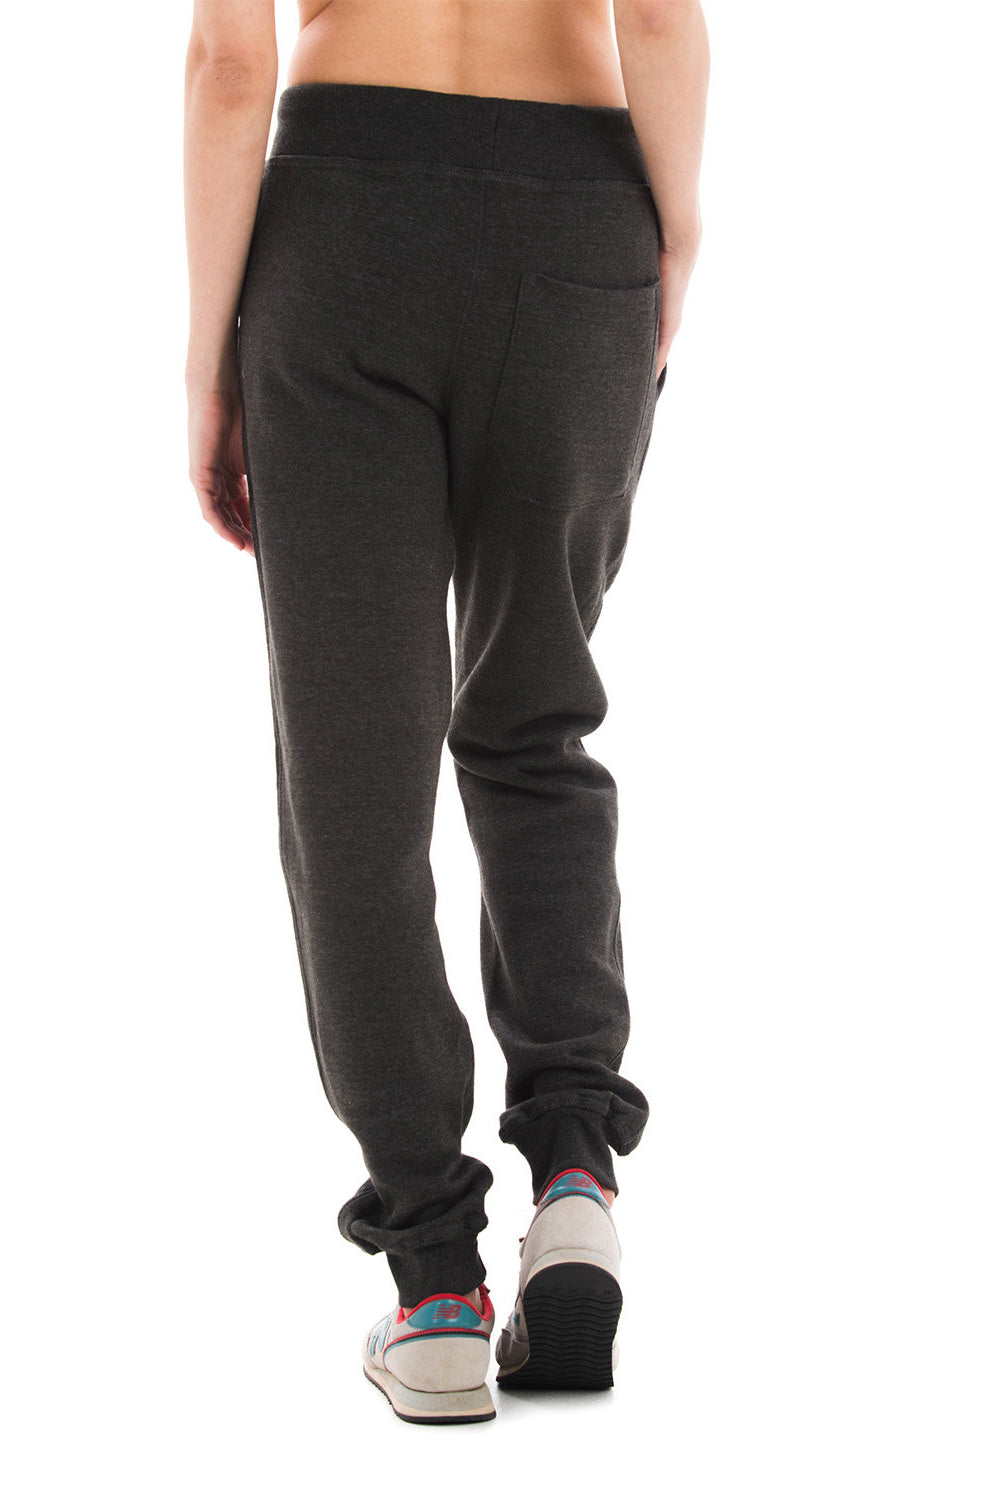 Lane Seven LST006 Mens Premium Jogger Sweatpants w/ Pockets Heather Charcoal Grey Back